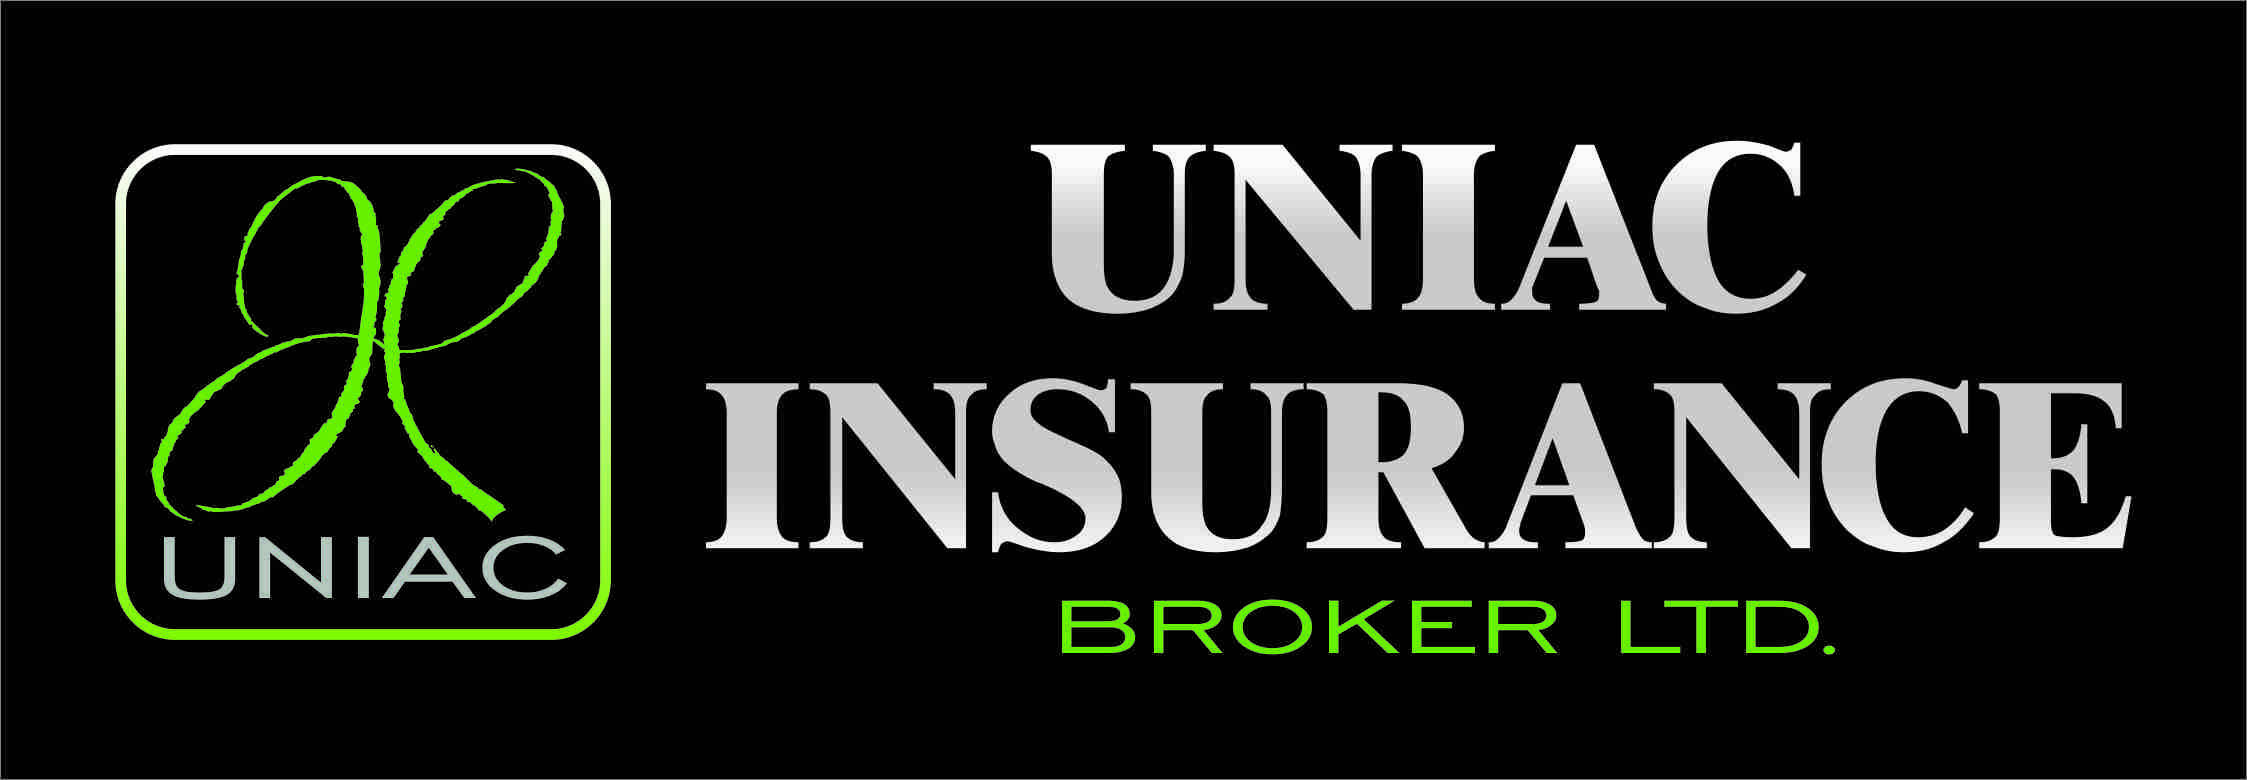 Uniac Insurance